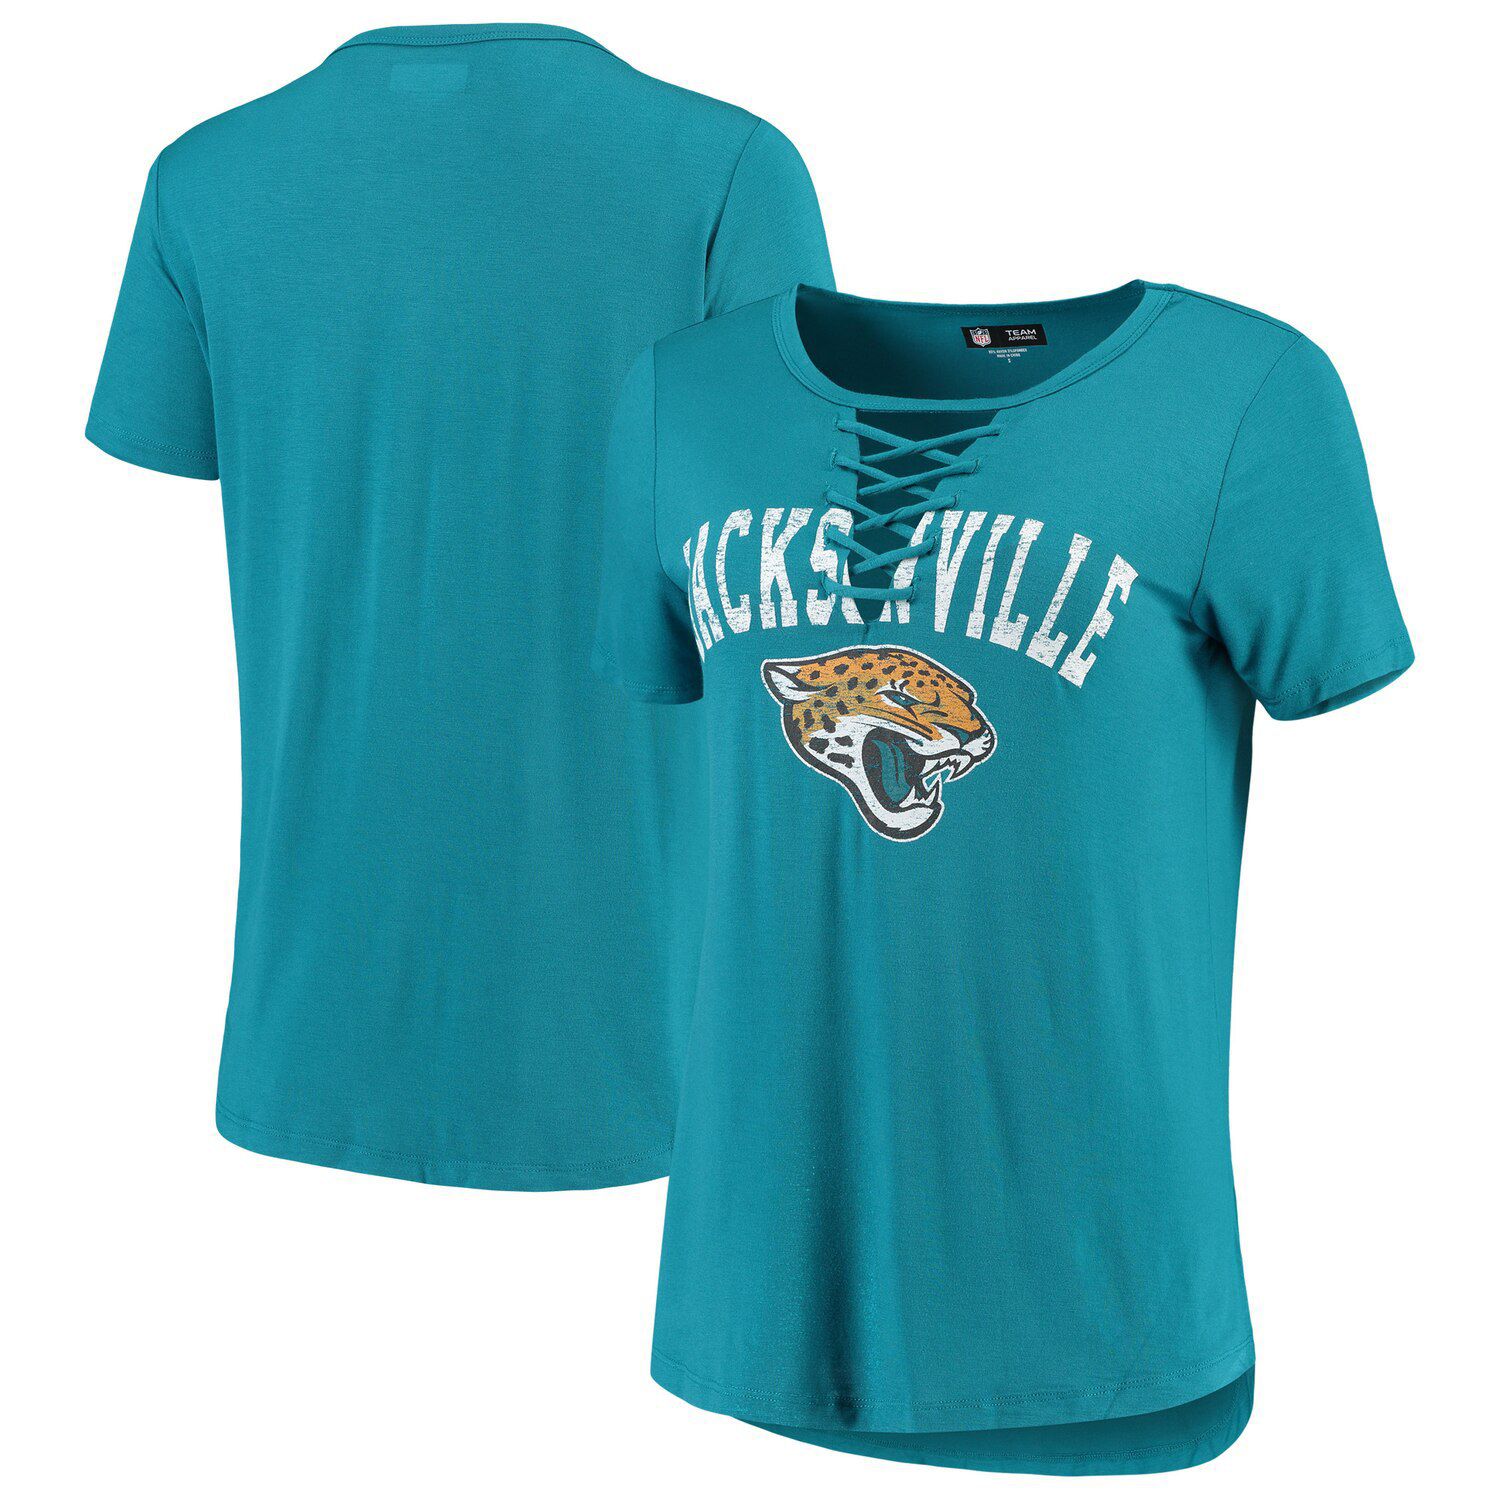 jacksonville jaguars women's shirts